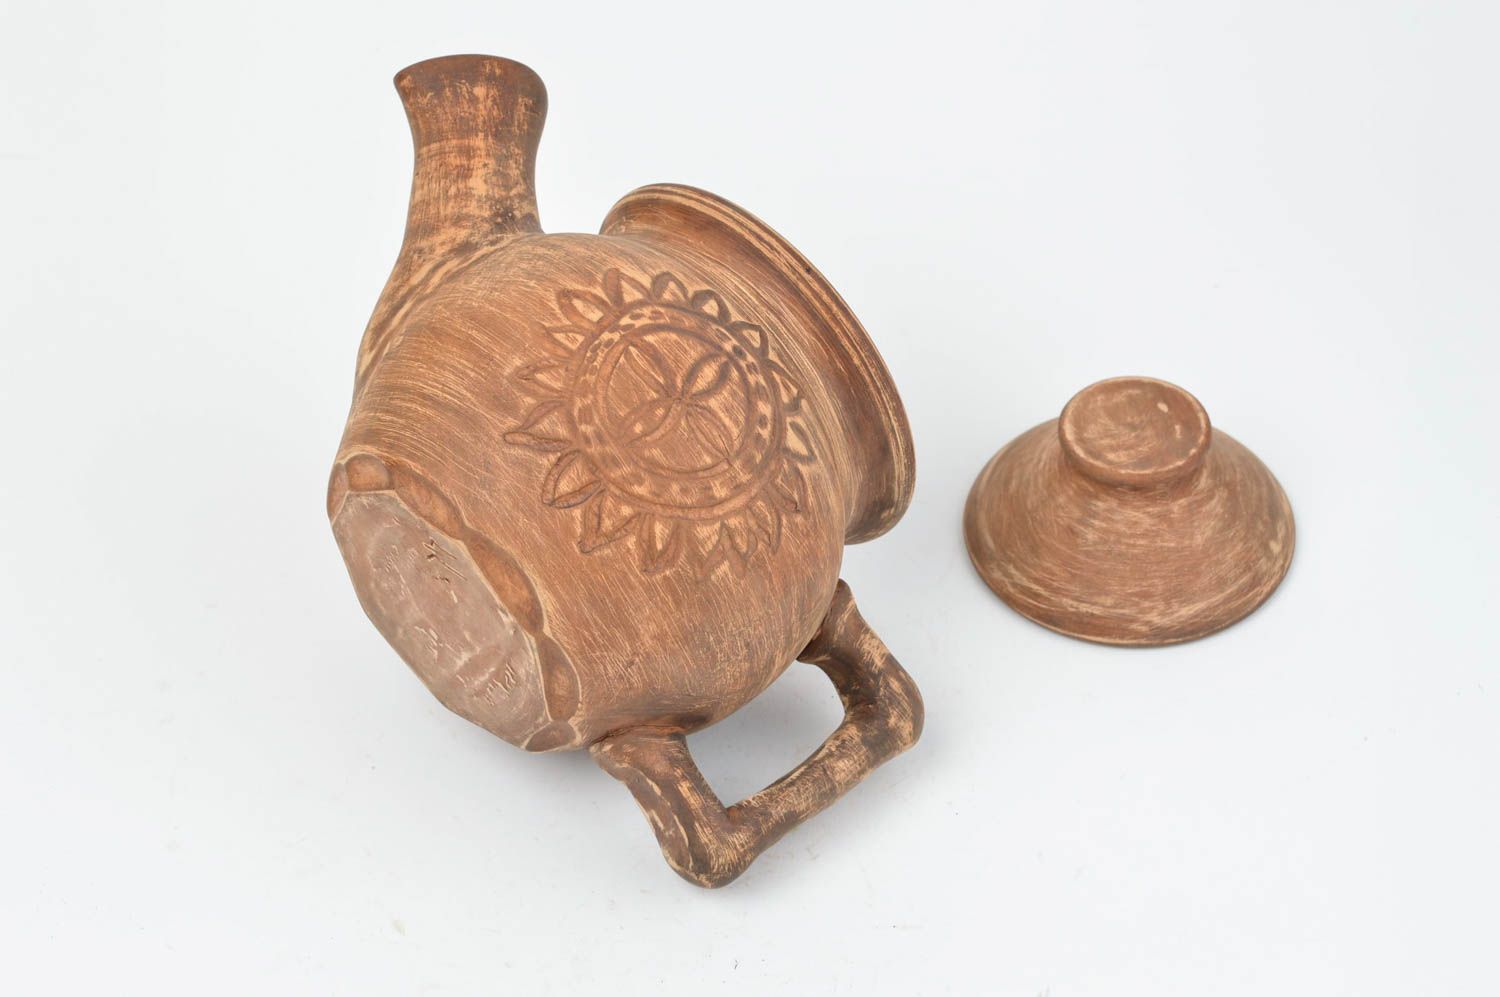 Unusual handmade ceramic teapot designer clay teapot table setting ideas photo 4